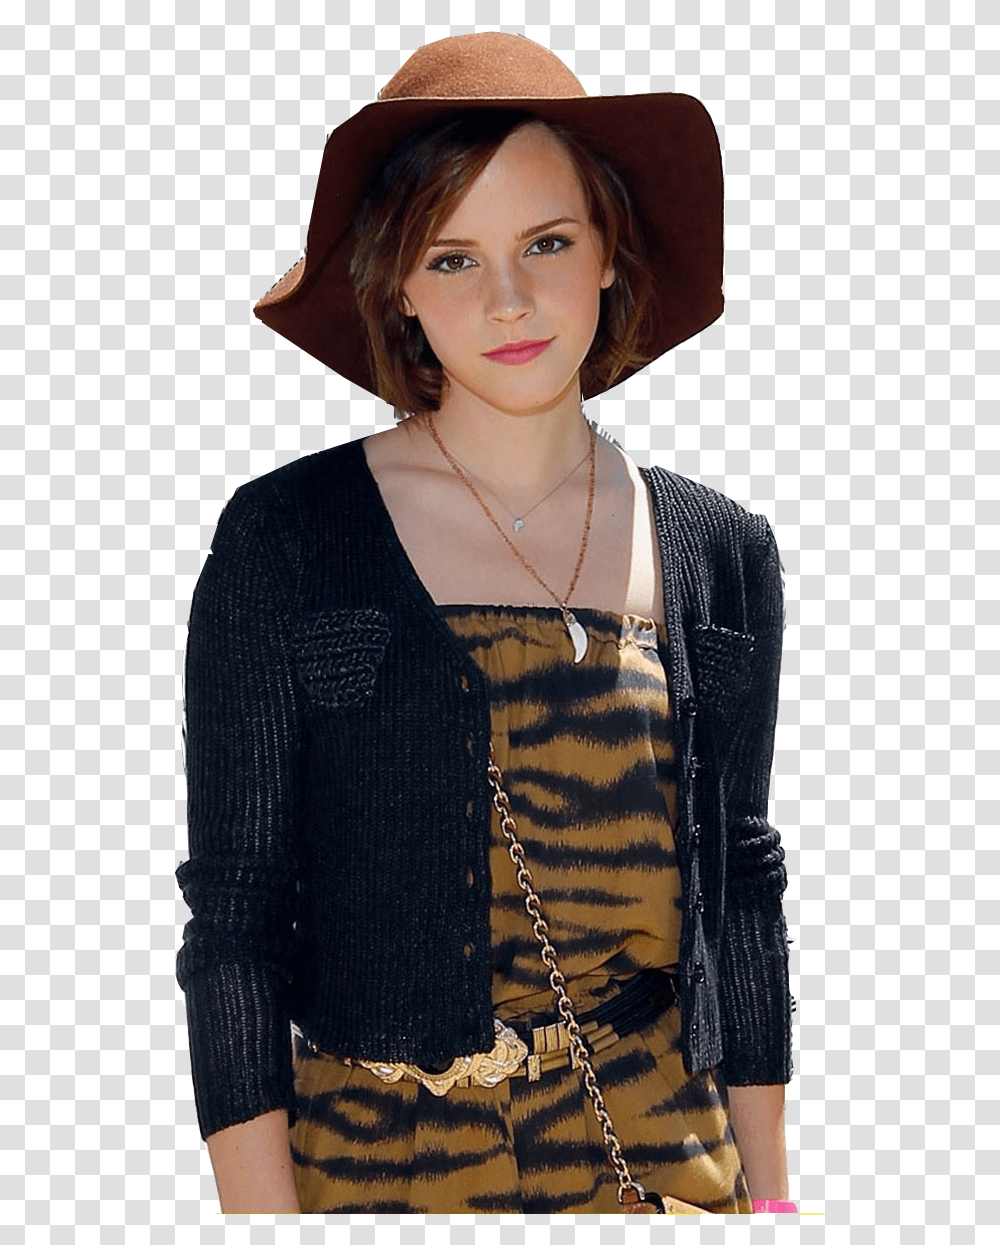 Emma Watson Hd And Hq Image Emma Watson Coachella 2016, Apparel, Hat, Necklace Transparent Png